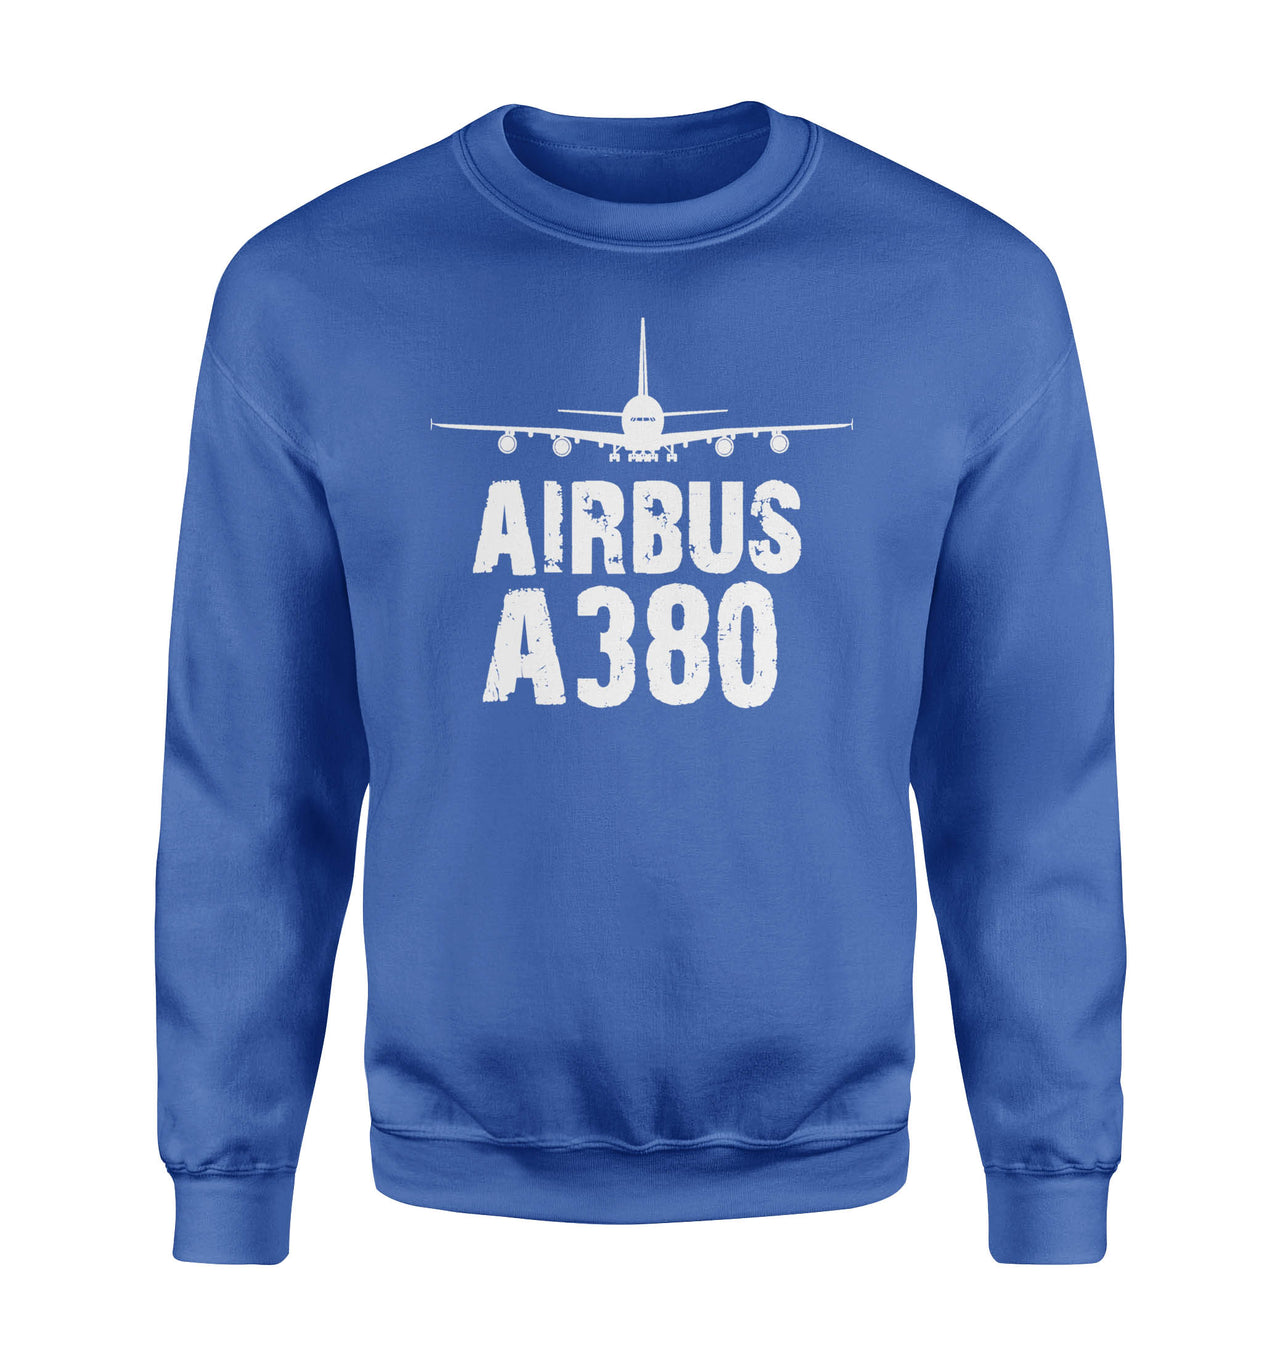 Airbus A380 & Plane Designed Sweatshirts